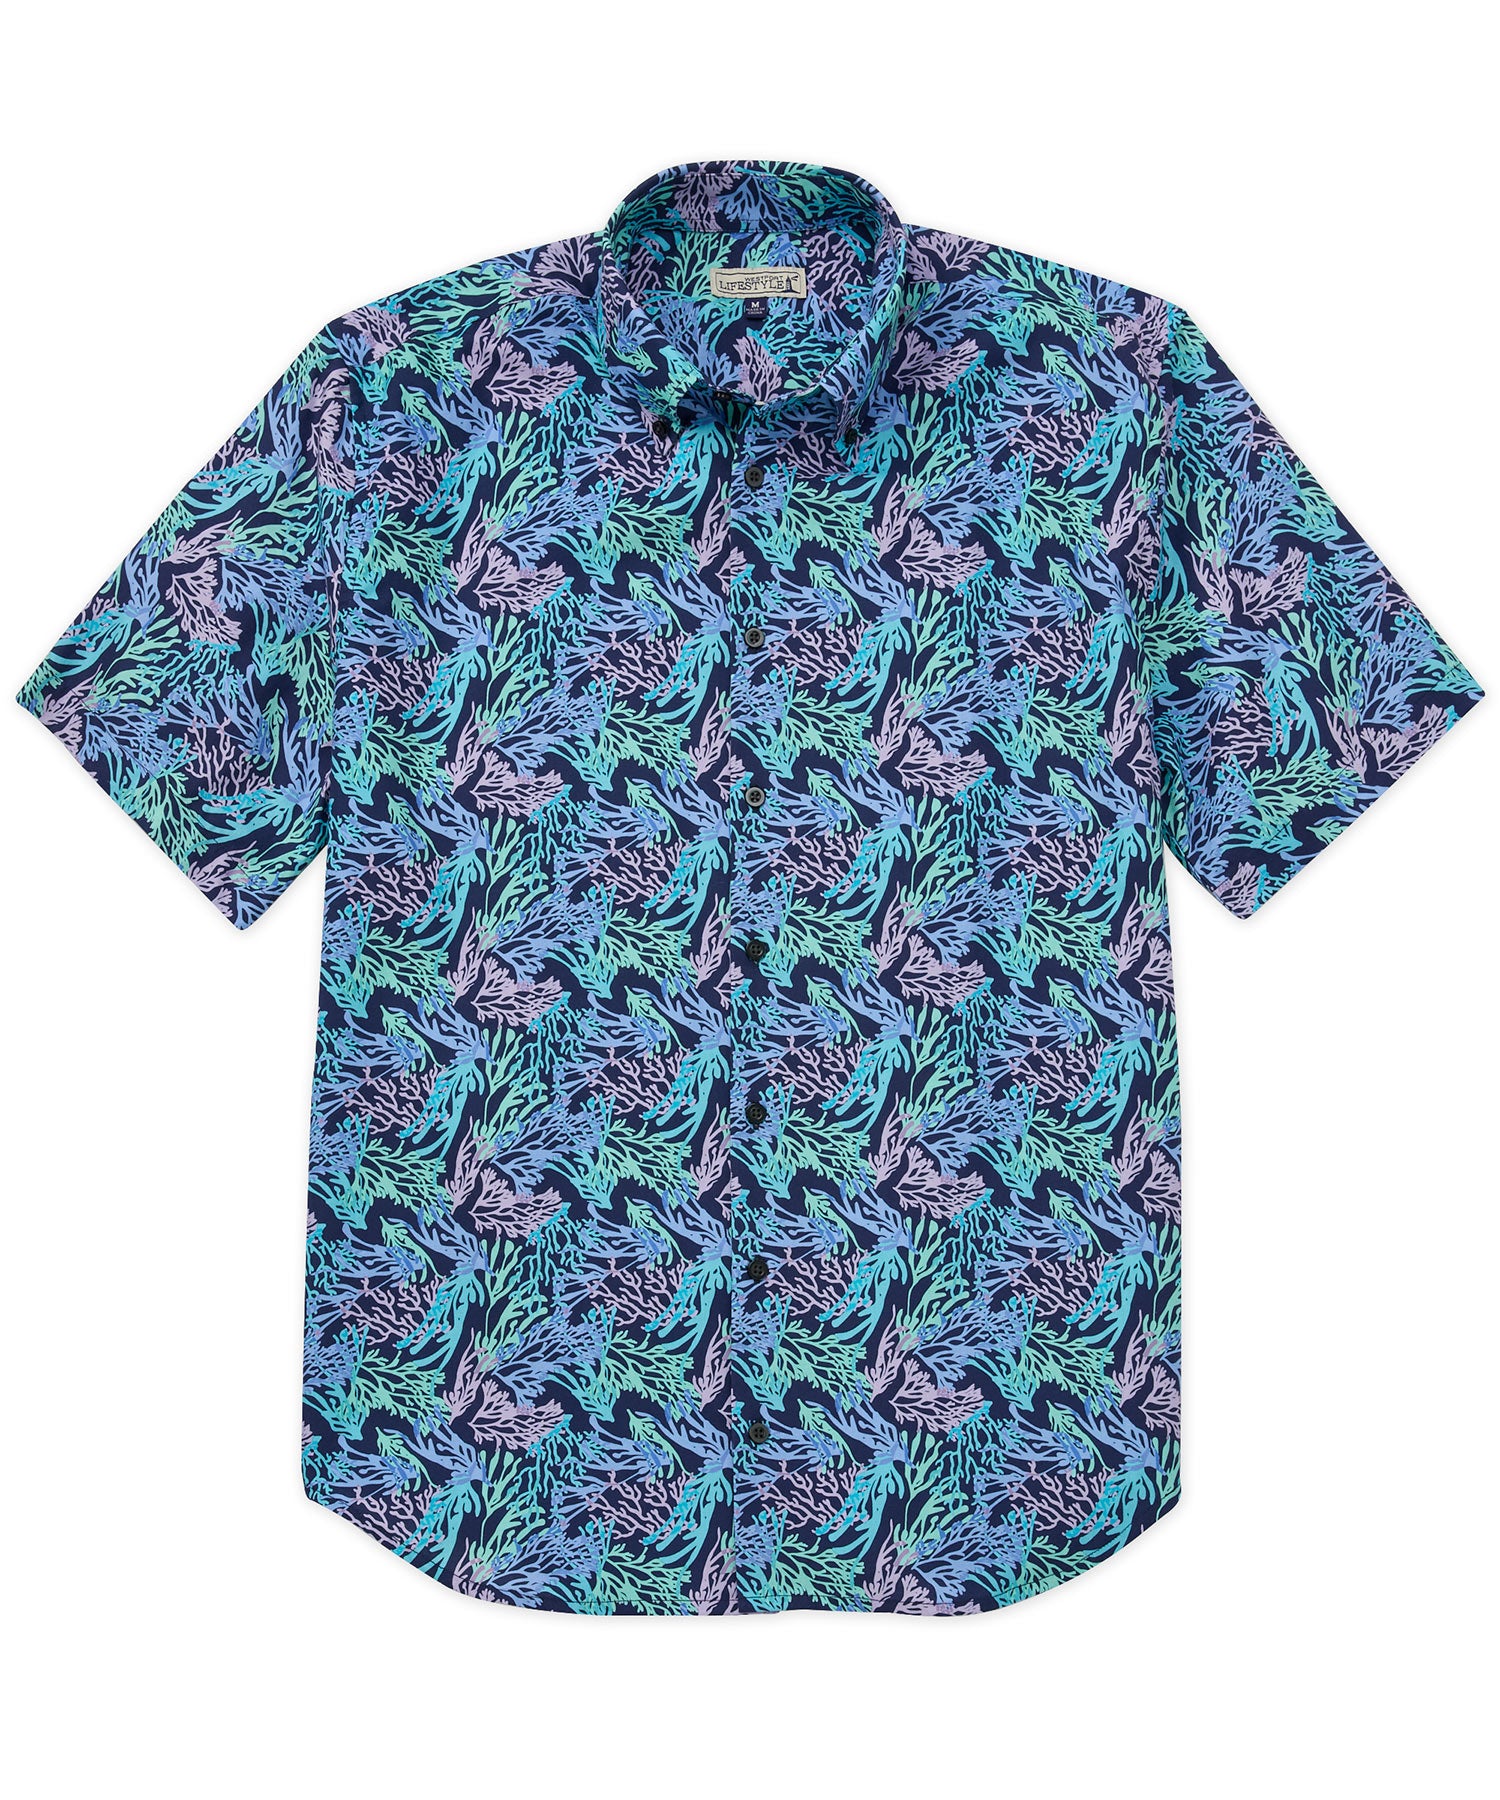 Westport Lifestyle Short Sleeve Coral Print Sport Shirt, Men's Big & Tall